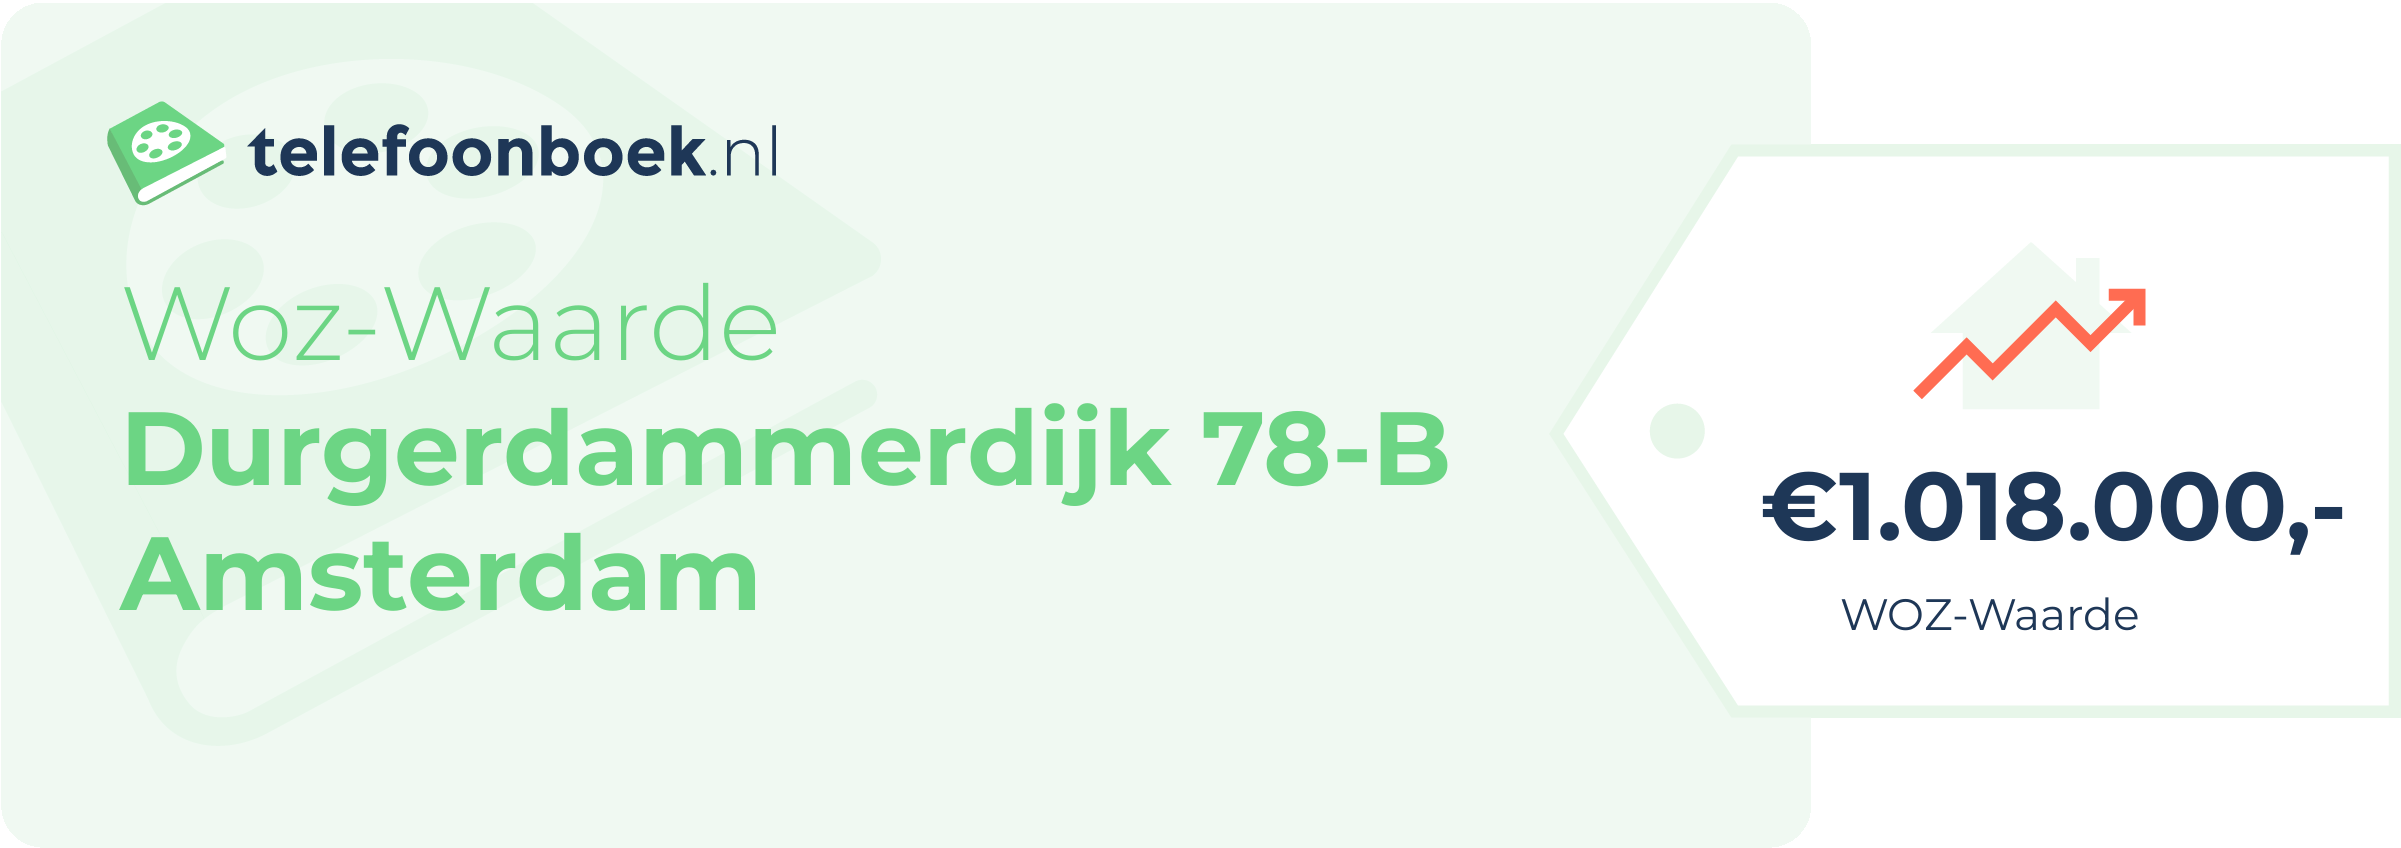 WOZ-waarde Durgerdammerdijk 78-B Amsterdam